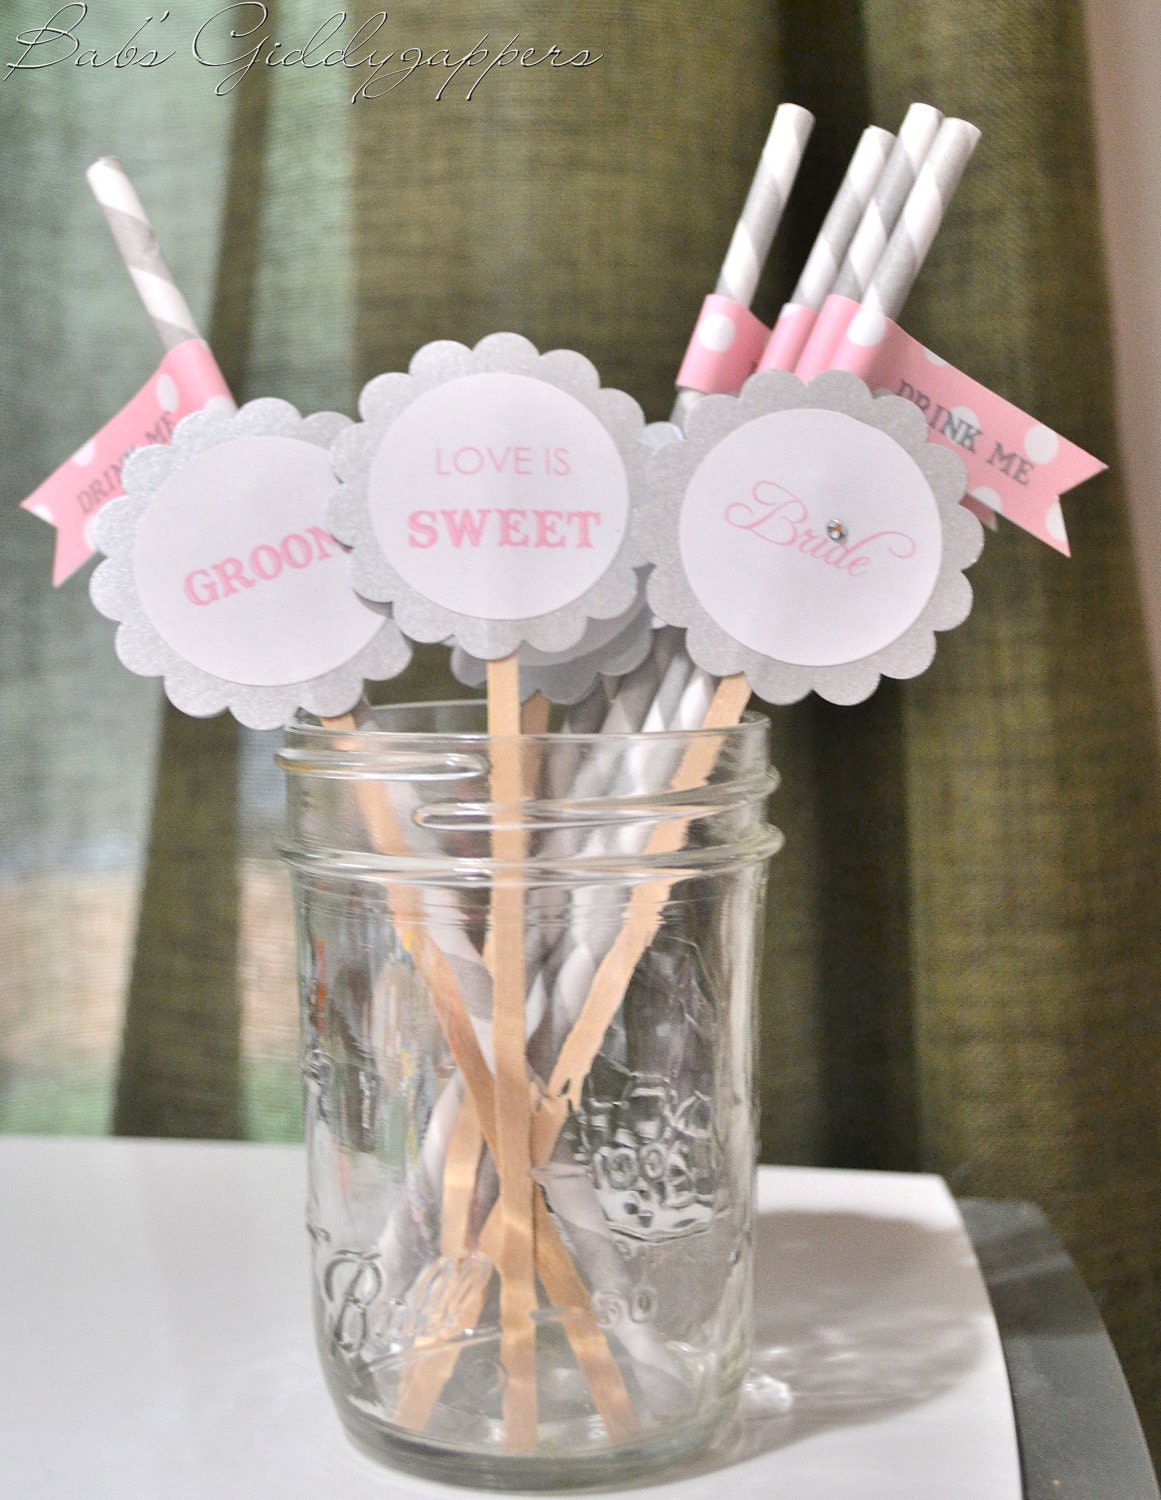 Wedding cupcake flags/drink stirrers